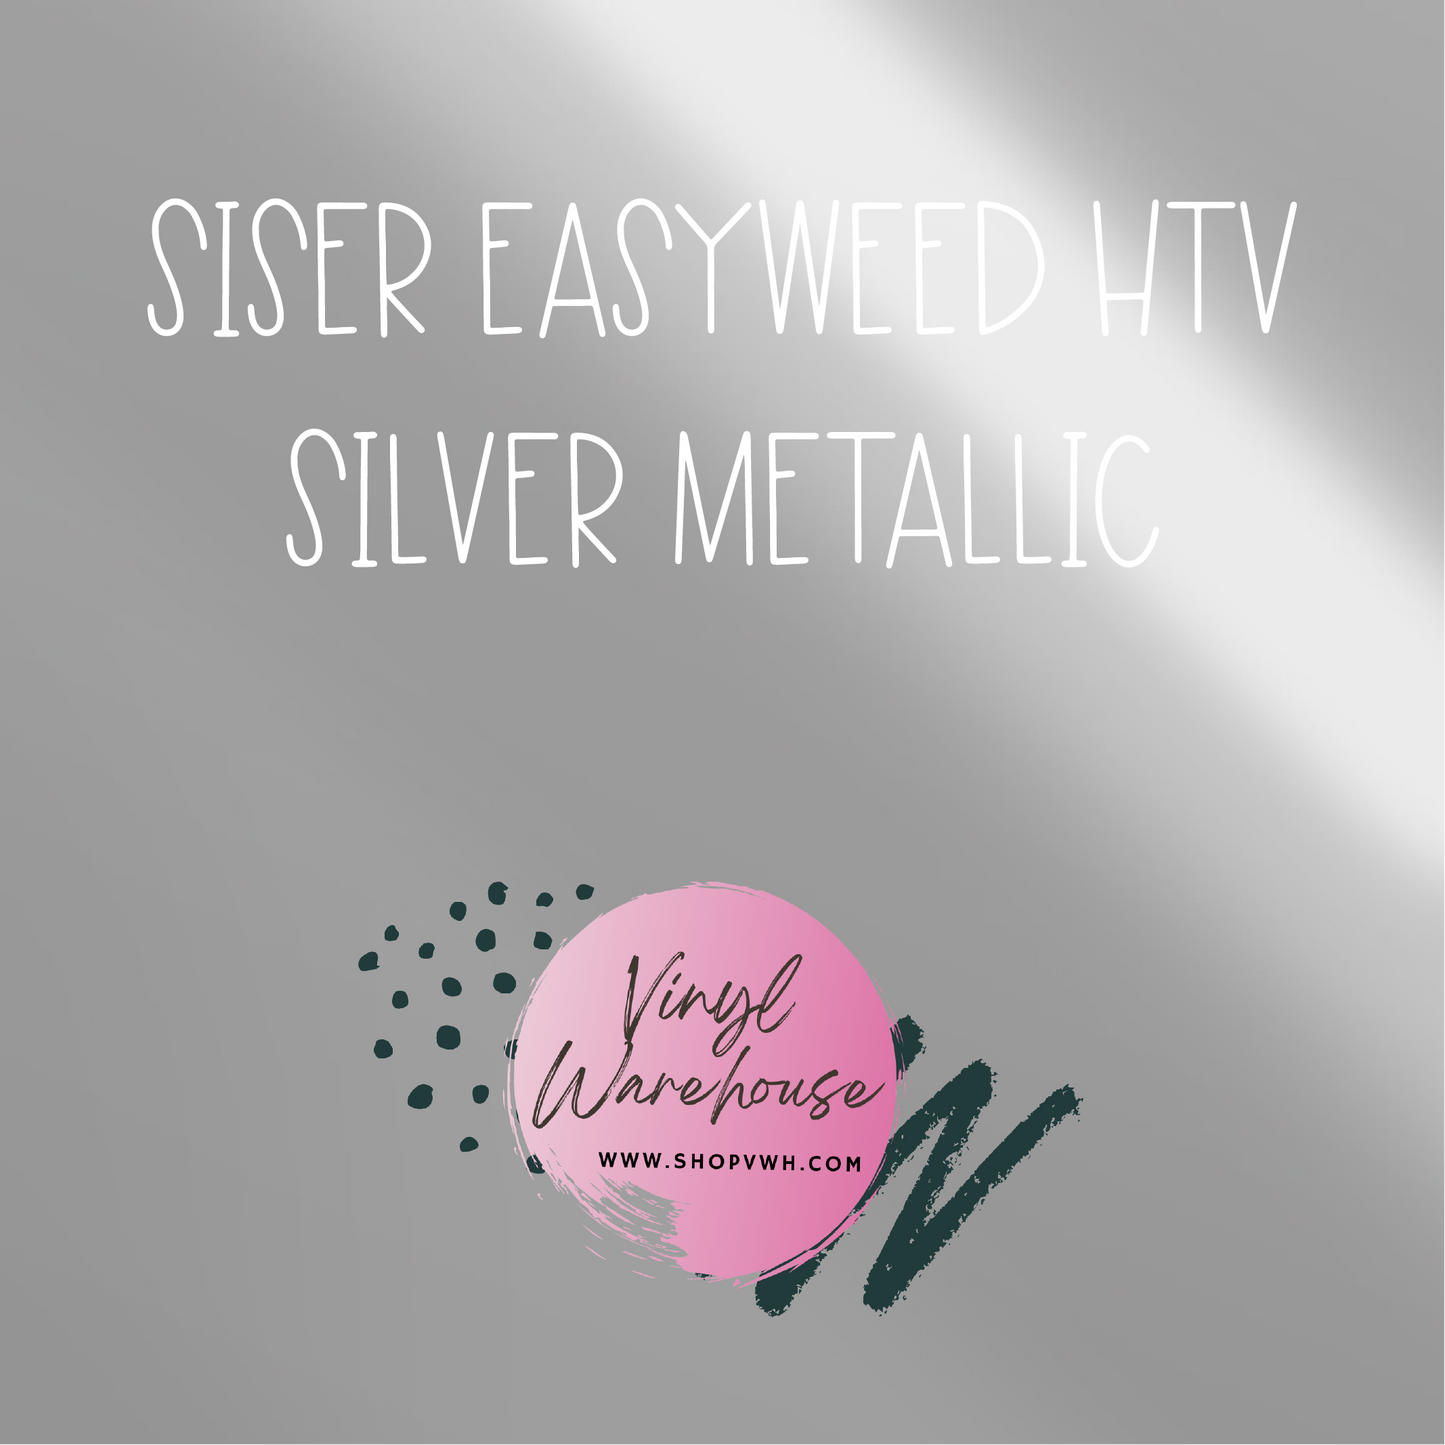 Siser EasyWeed HTV - Silver Metallic